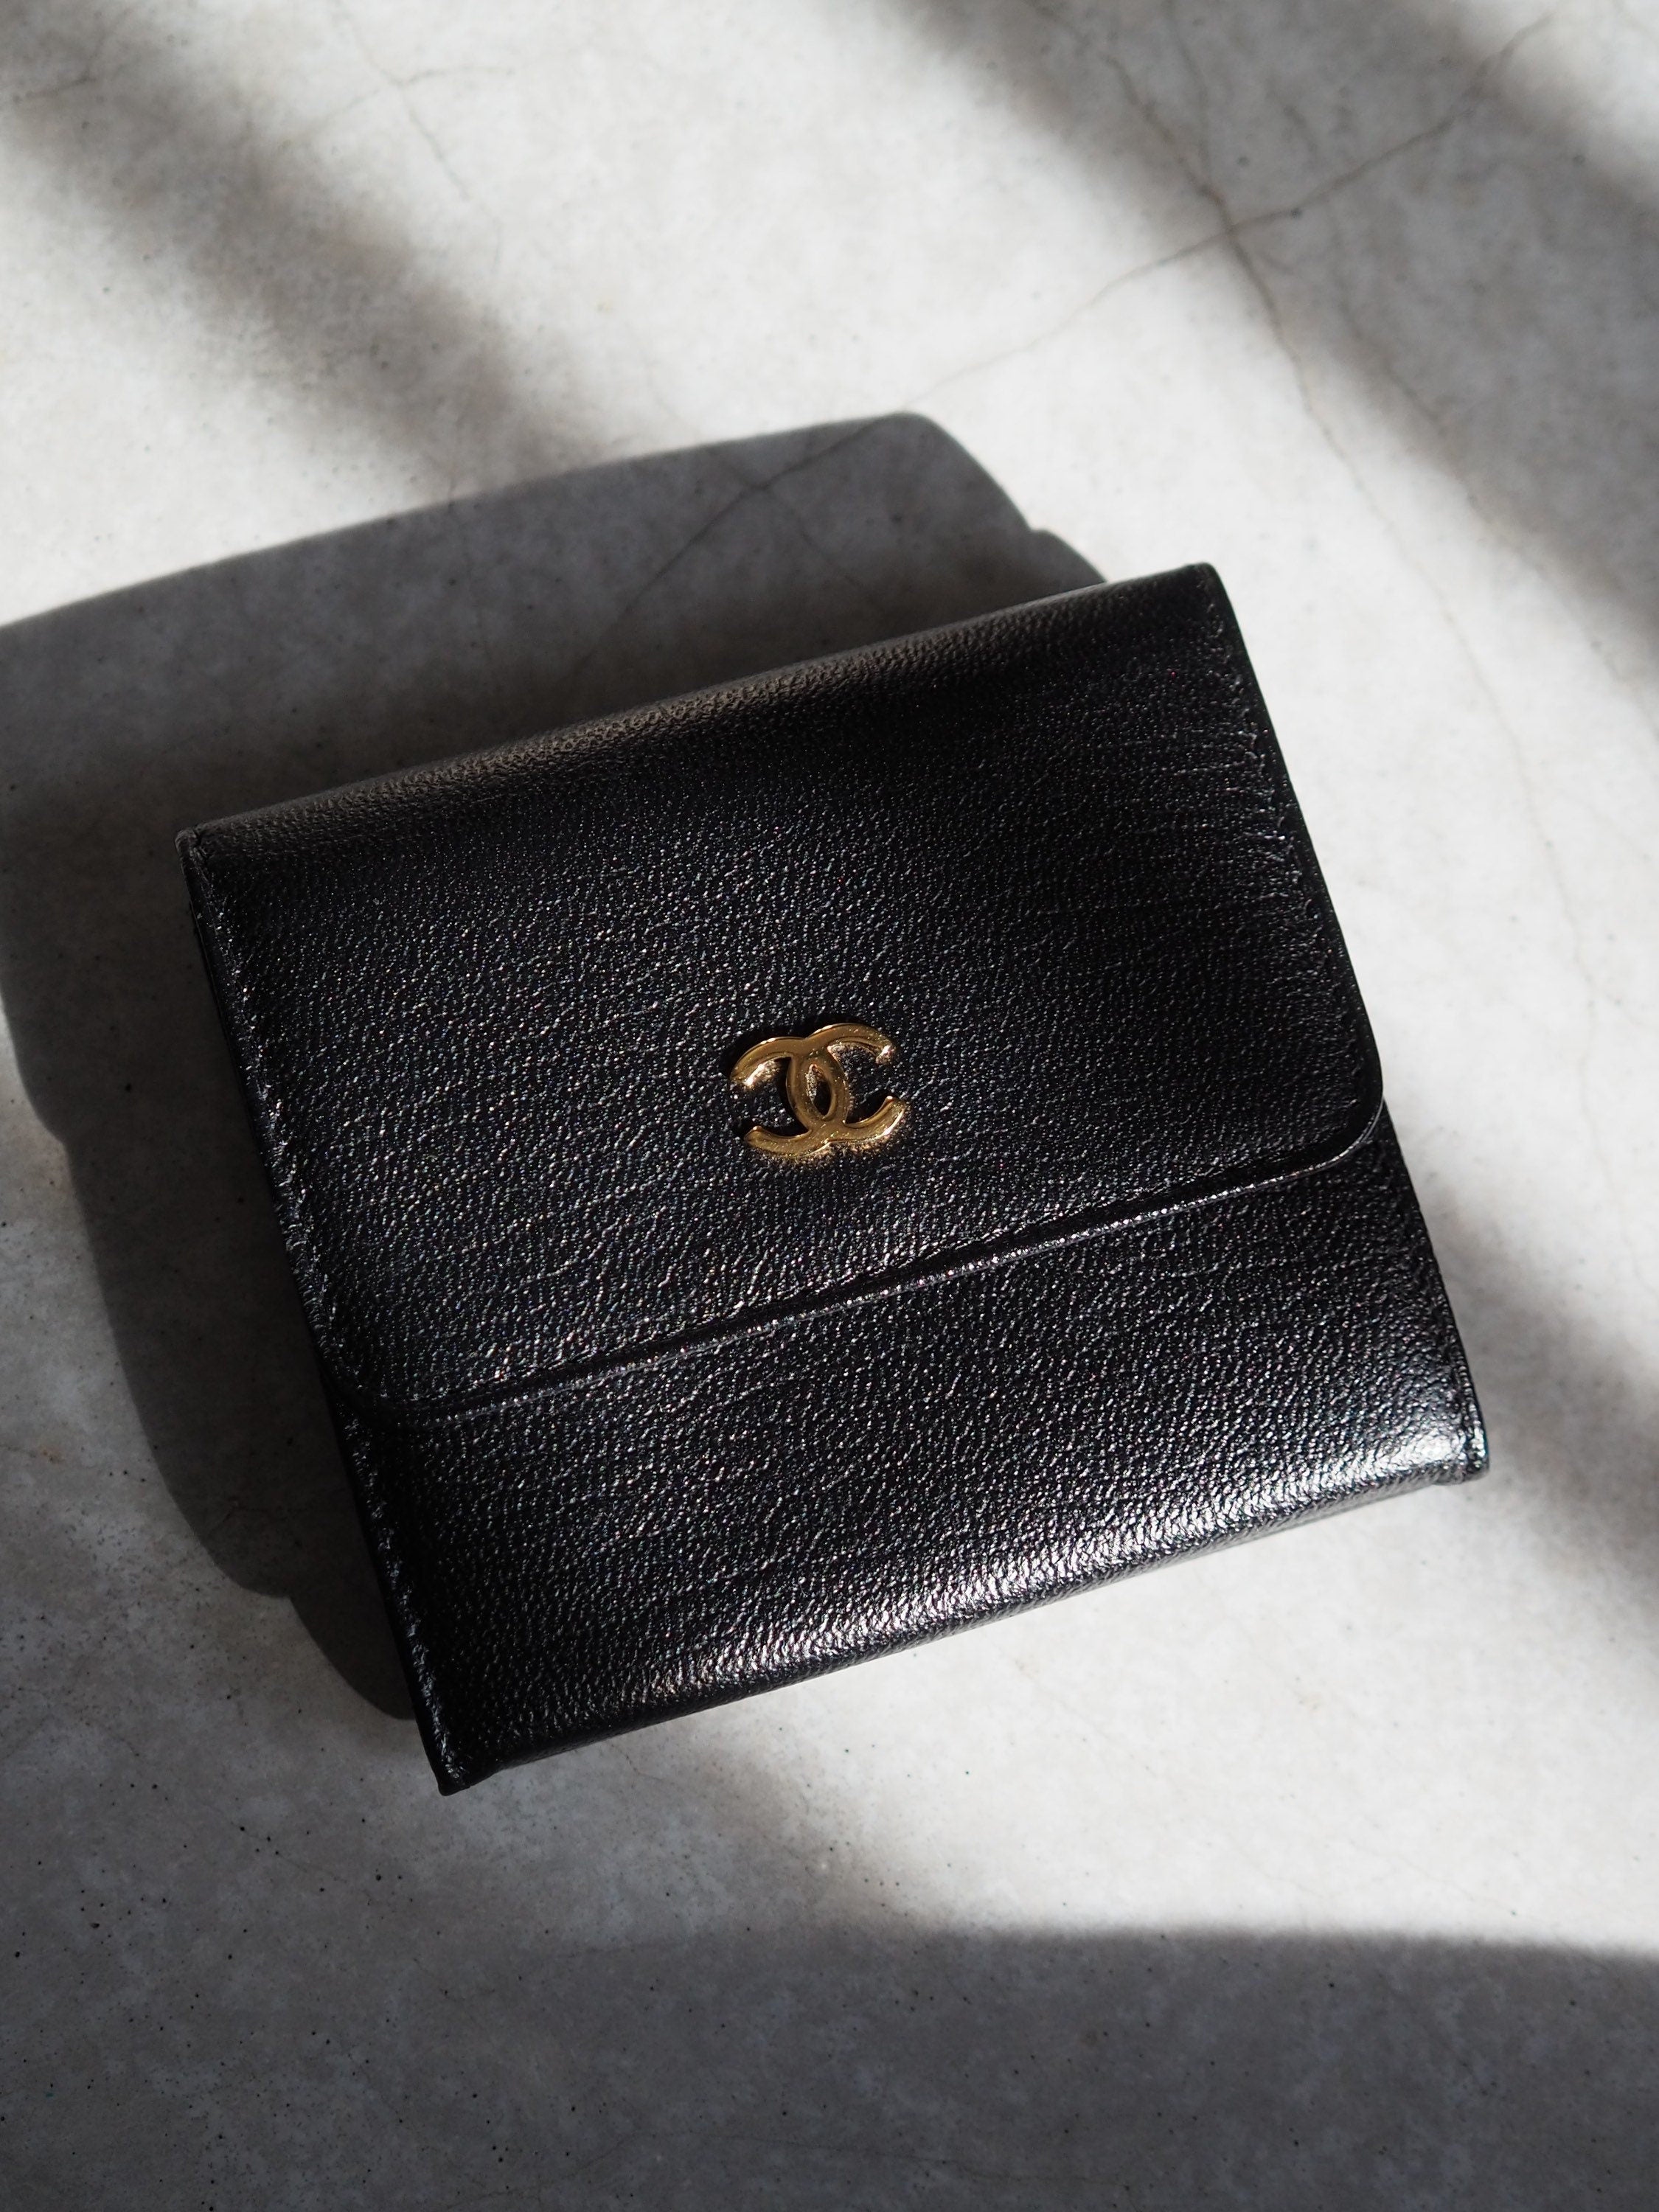 CHANEL COCO Wallet Compact Purse CC Leather Black Authentic Vintage